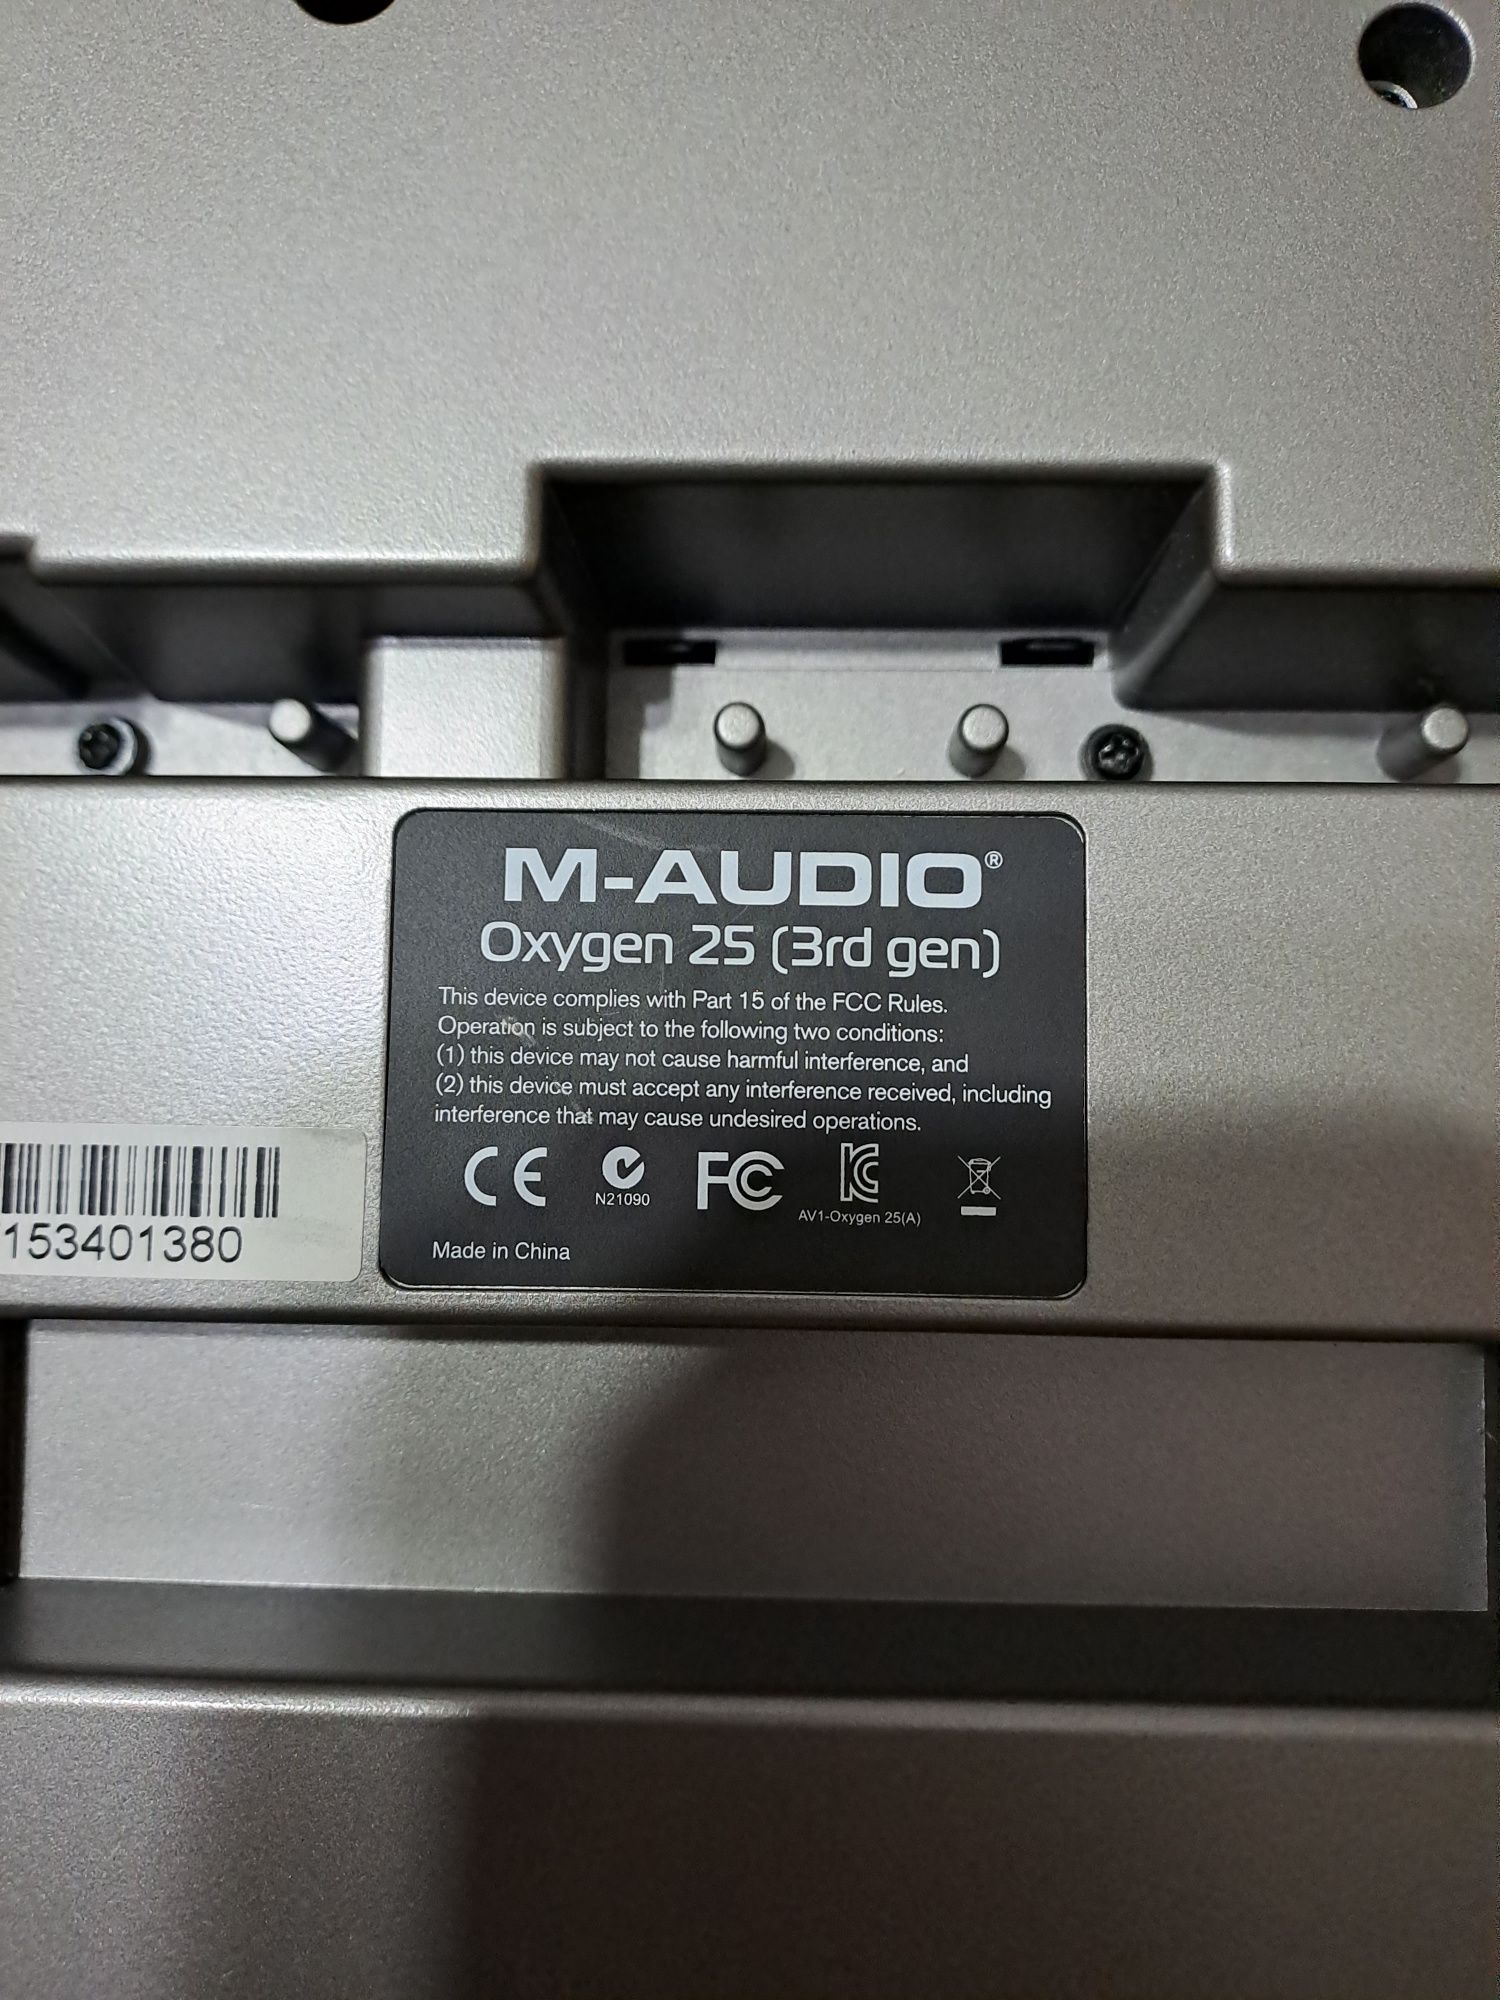 Clapa M-AUDIO oxygen